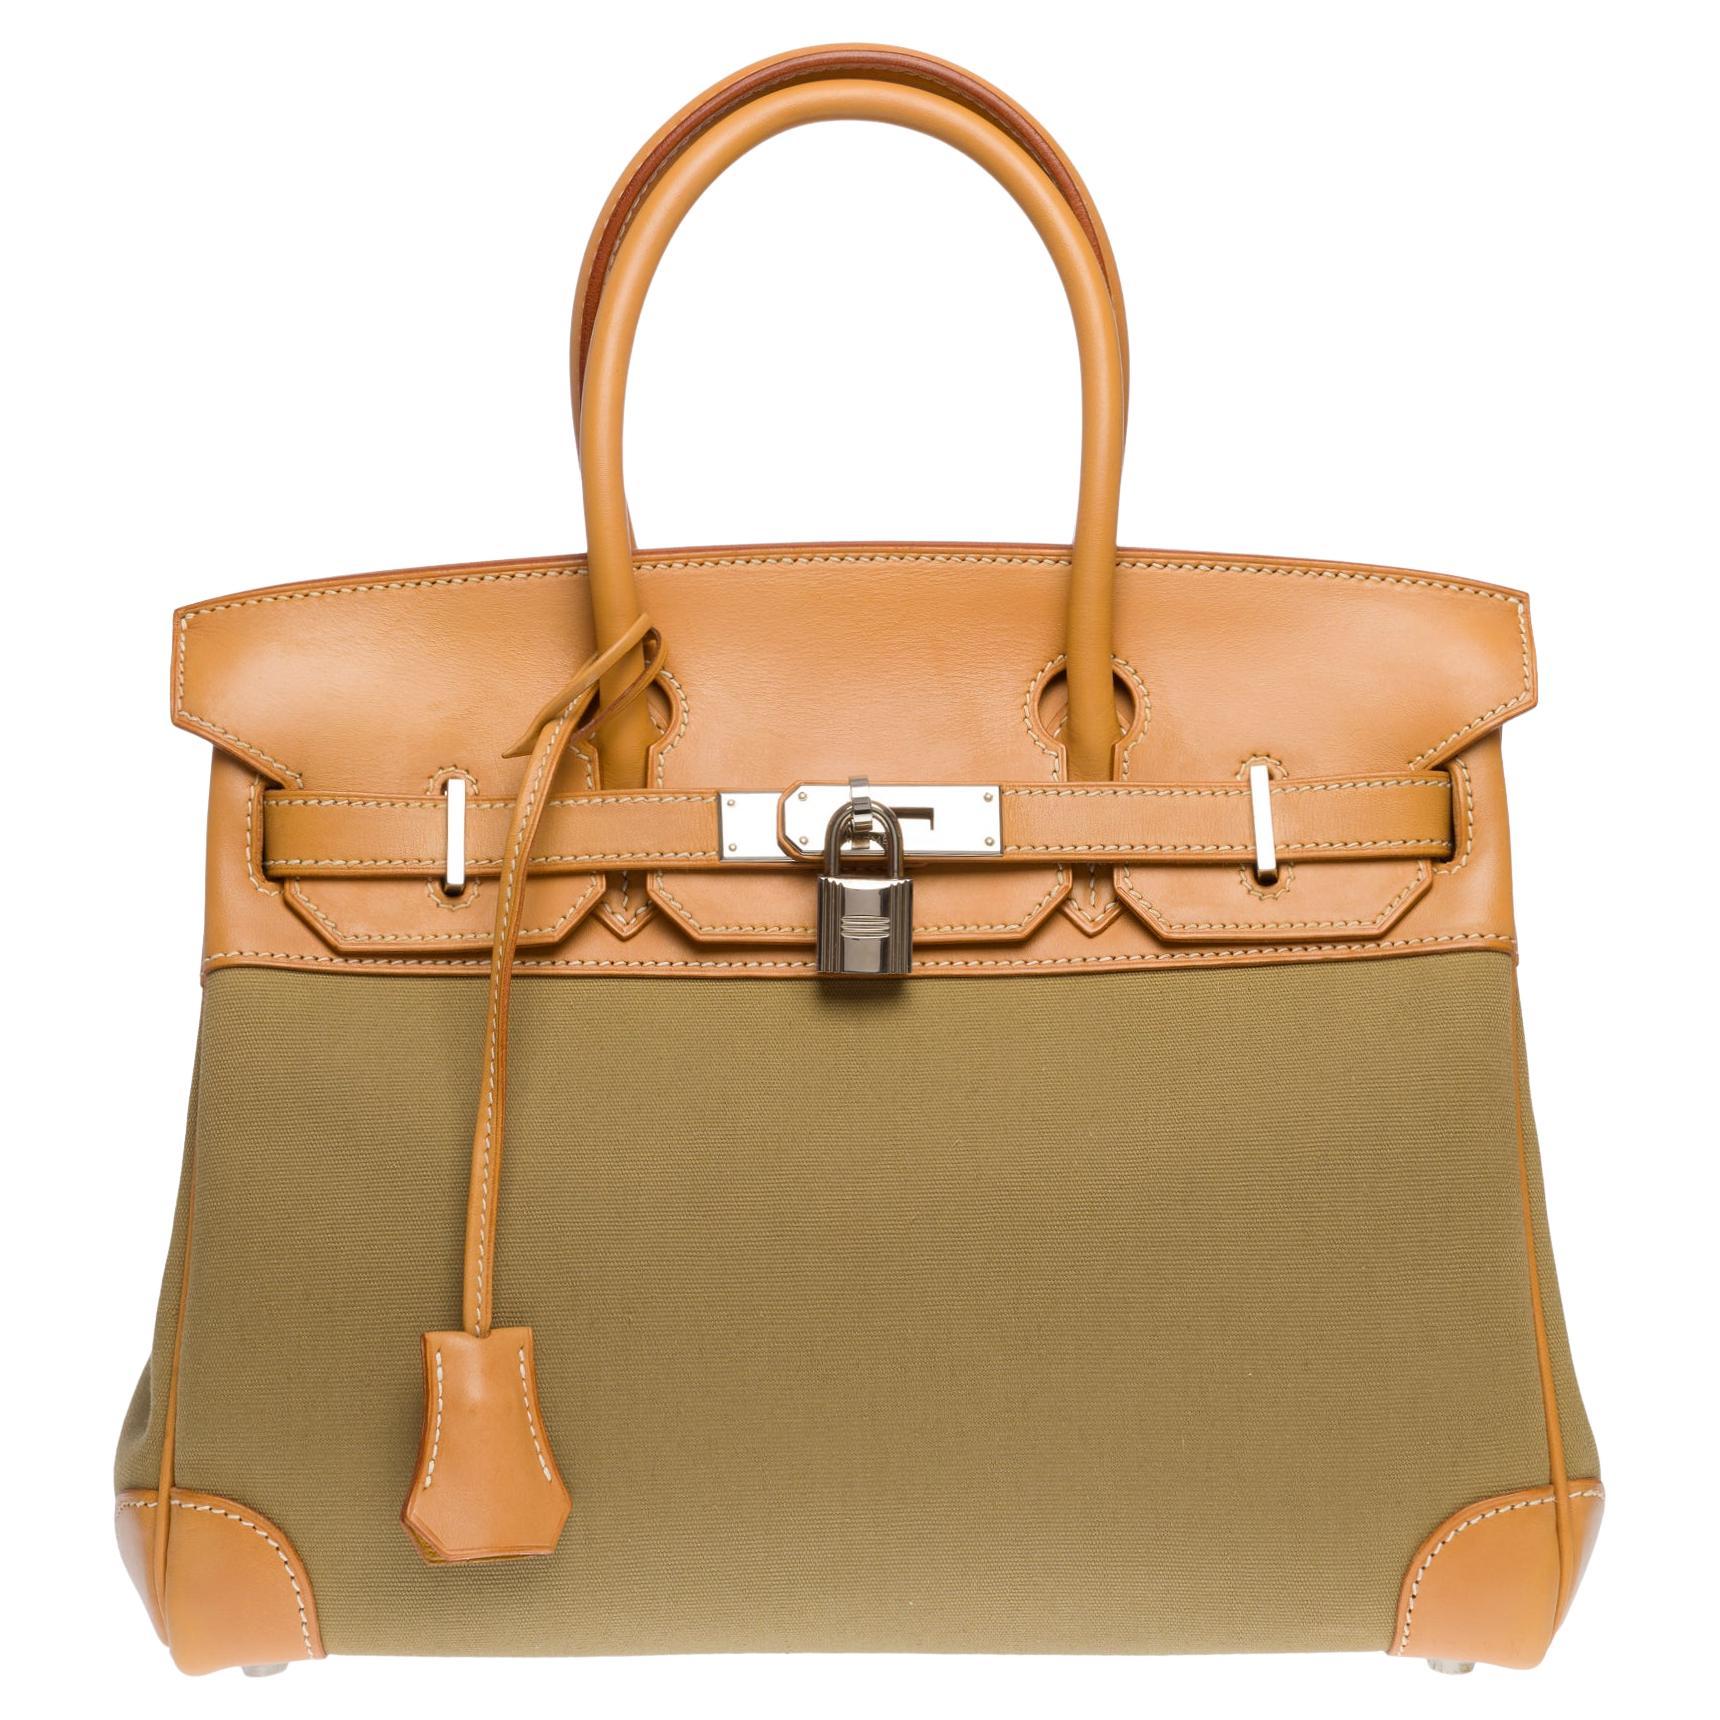 Rare Hermès Birkin 30 handbag in khaki canvas and natural calf leather, SHW